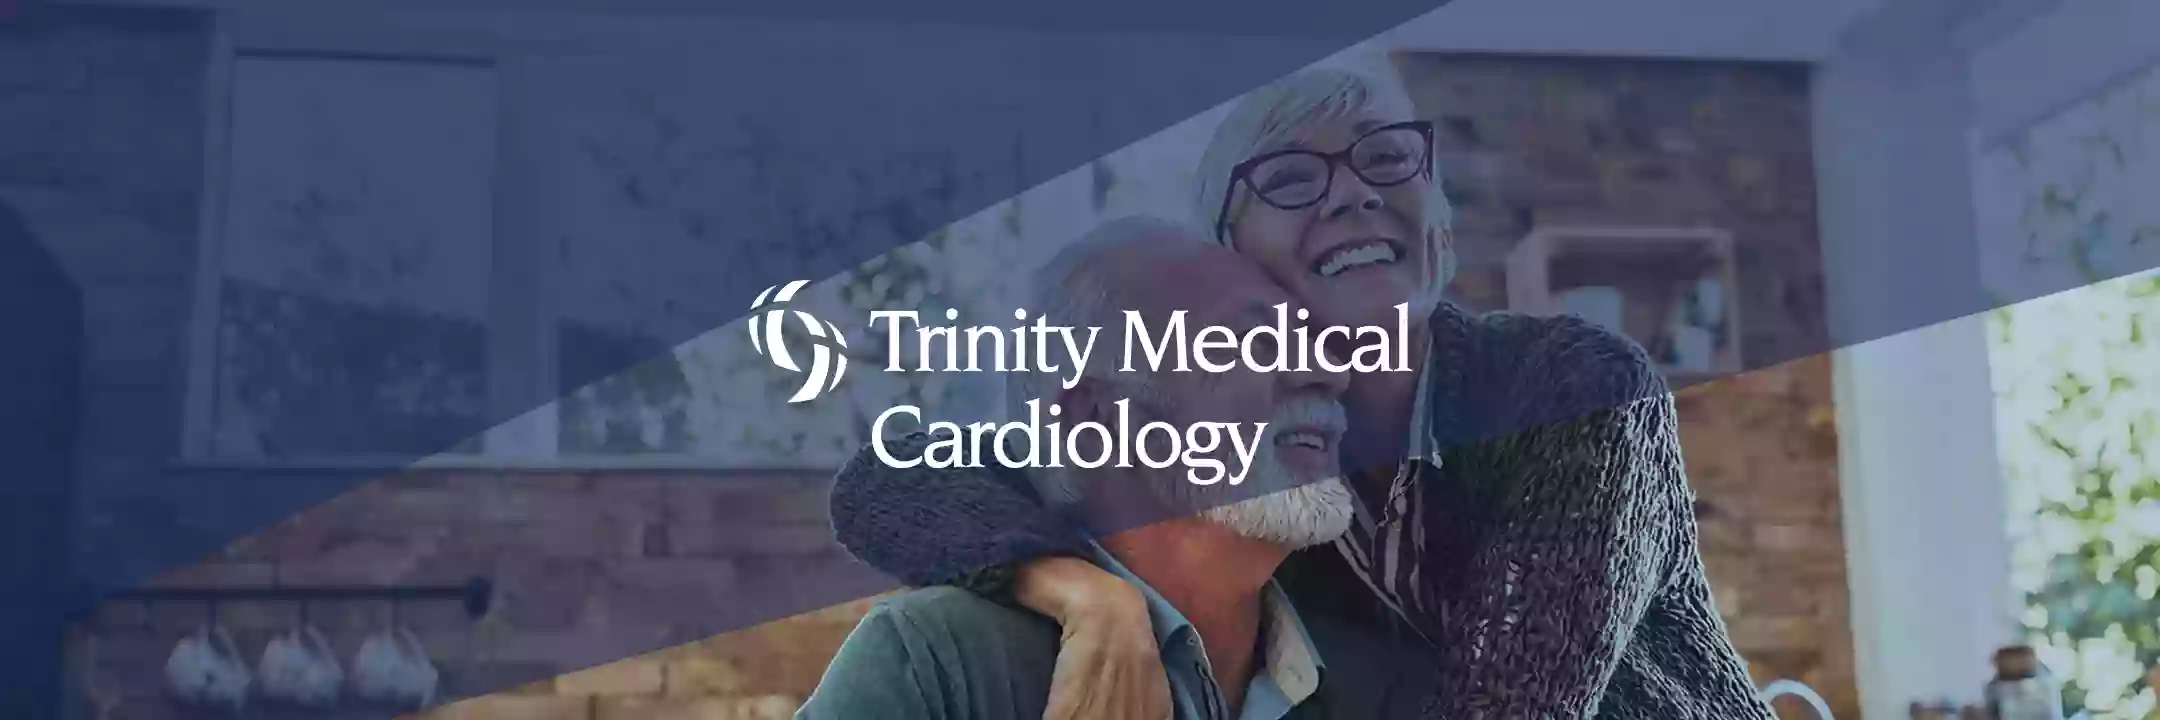 Trinity Medical Cardiology